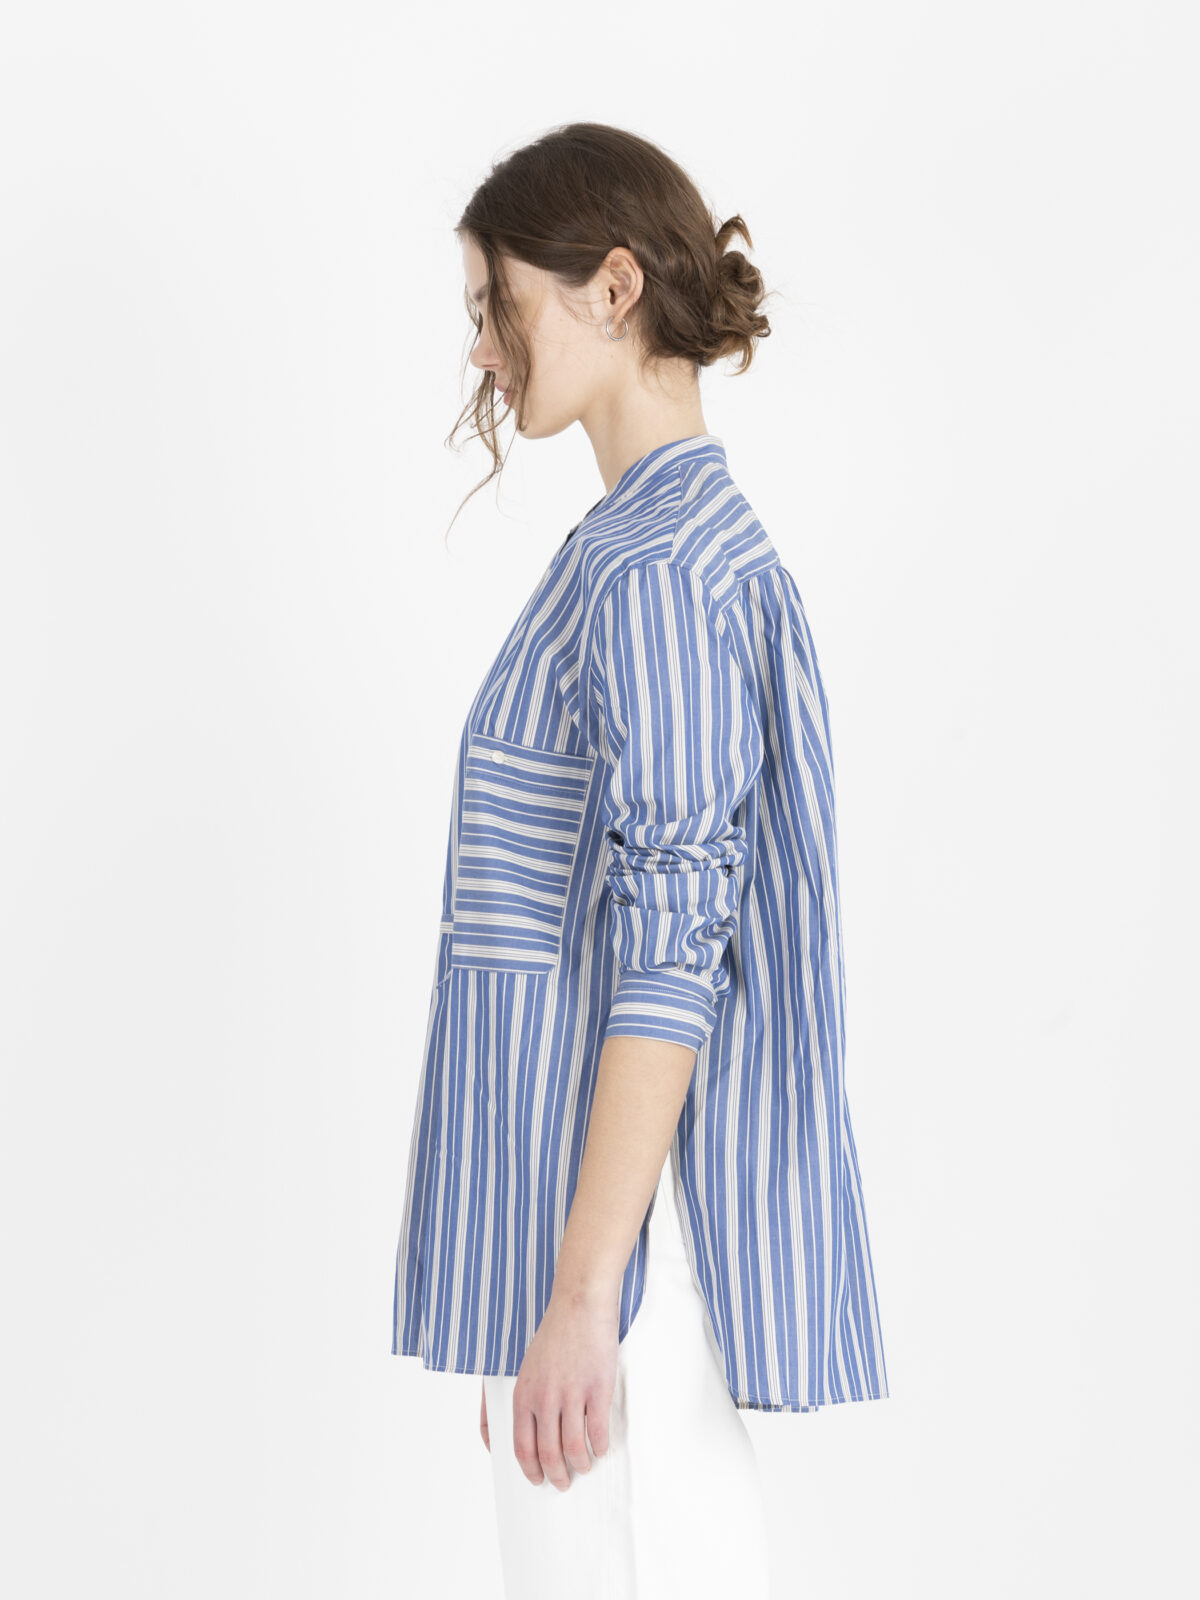 seville-blue-striped-cotton-shirt-oversized-round-collar-soeur-matchboxathens